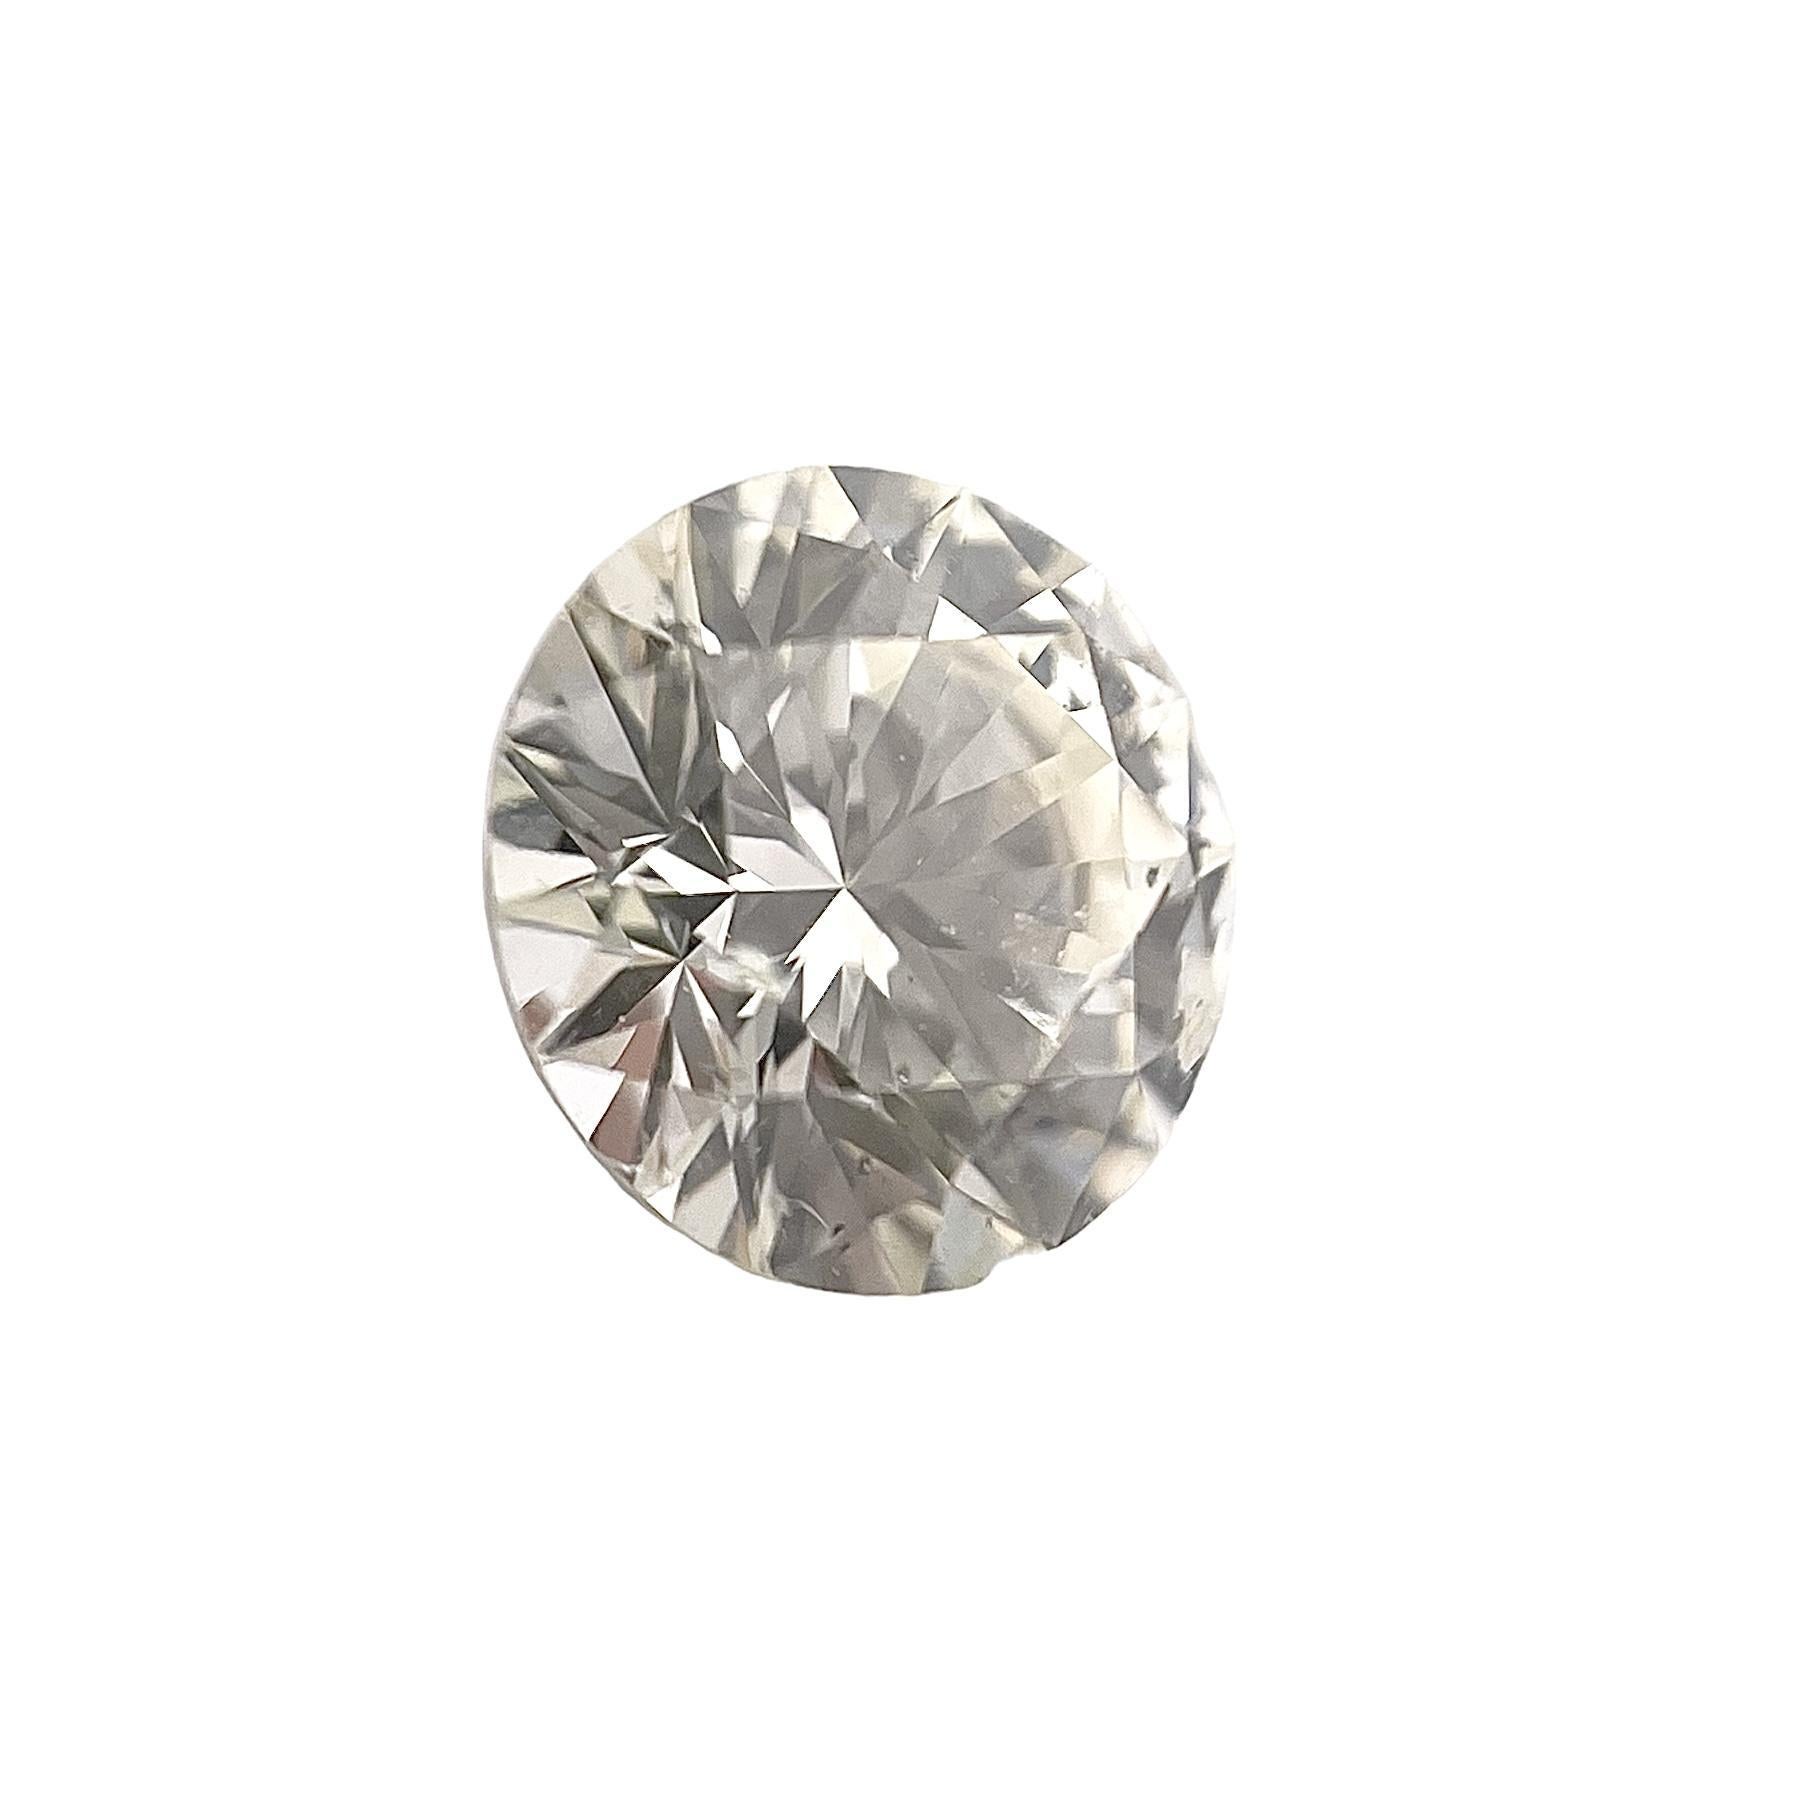 ITEM DESCRIPTION

ID #: NYC57461
Stone Shape: Round
Diamond Weight: 1.31 carat
Clarity: SI2
Color: Q to R Range
Cut:	Excellent
Measurements: 7.09 x 7.10 x 4.34 mm
Depth %: 61.10%
Table %: 	57.00%
Symmetry: Excellent
Polish: Excellent
Fluorescence: